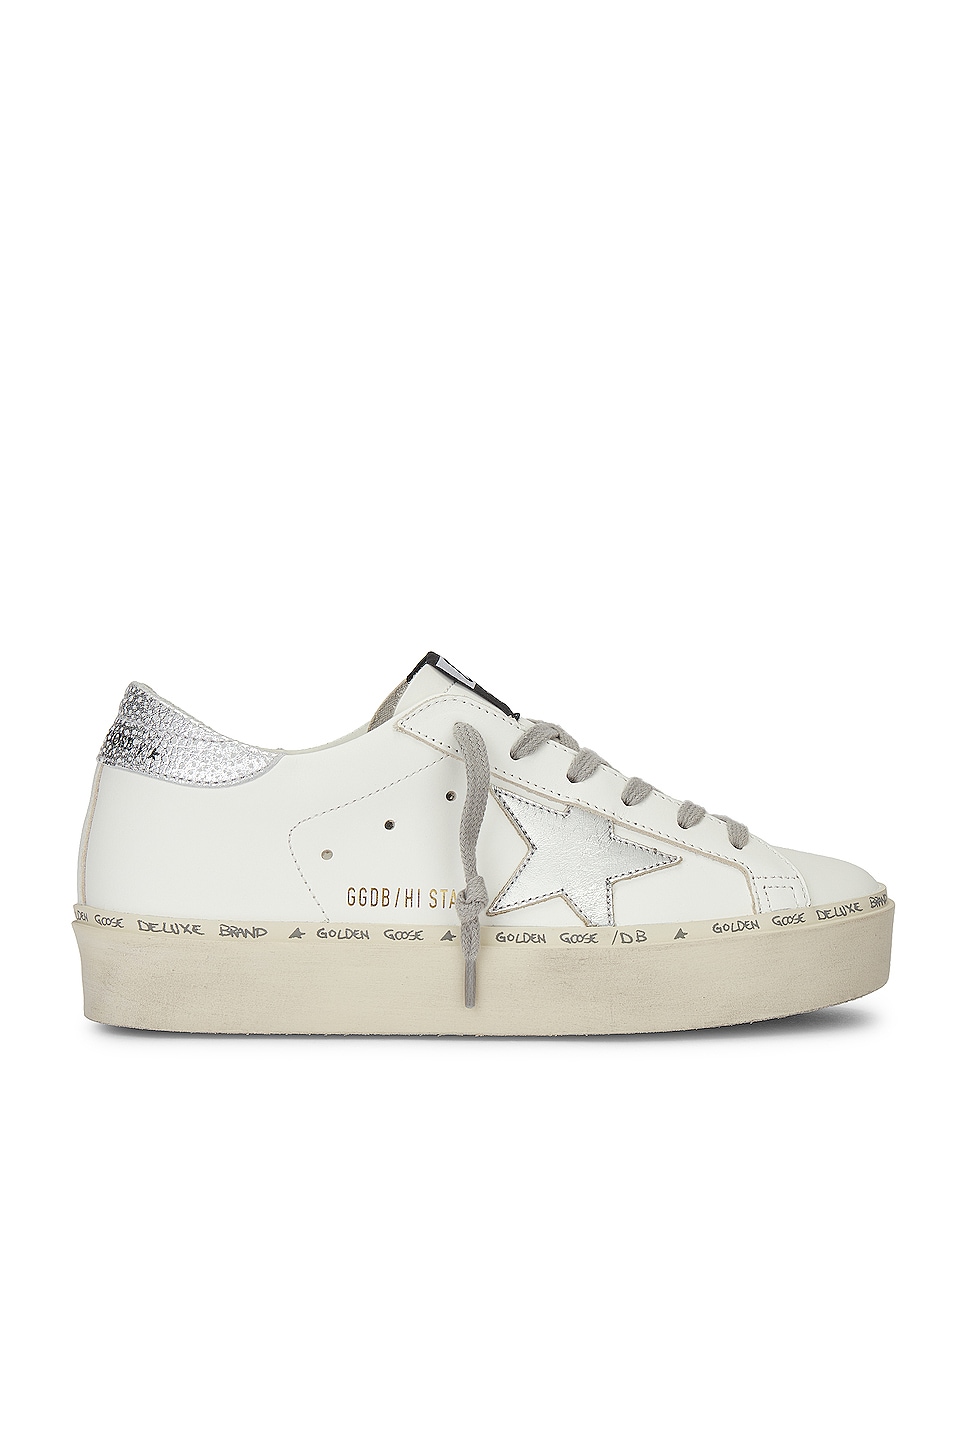 Image 1 of Golden Goose Hi Star Leather Upper Sneaker in White & Silver